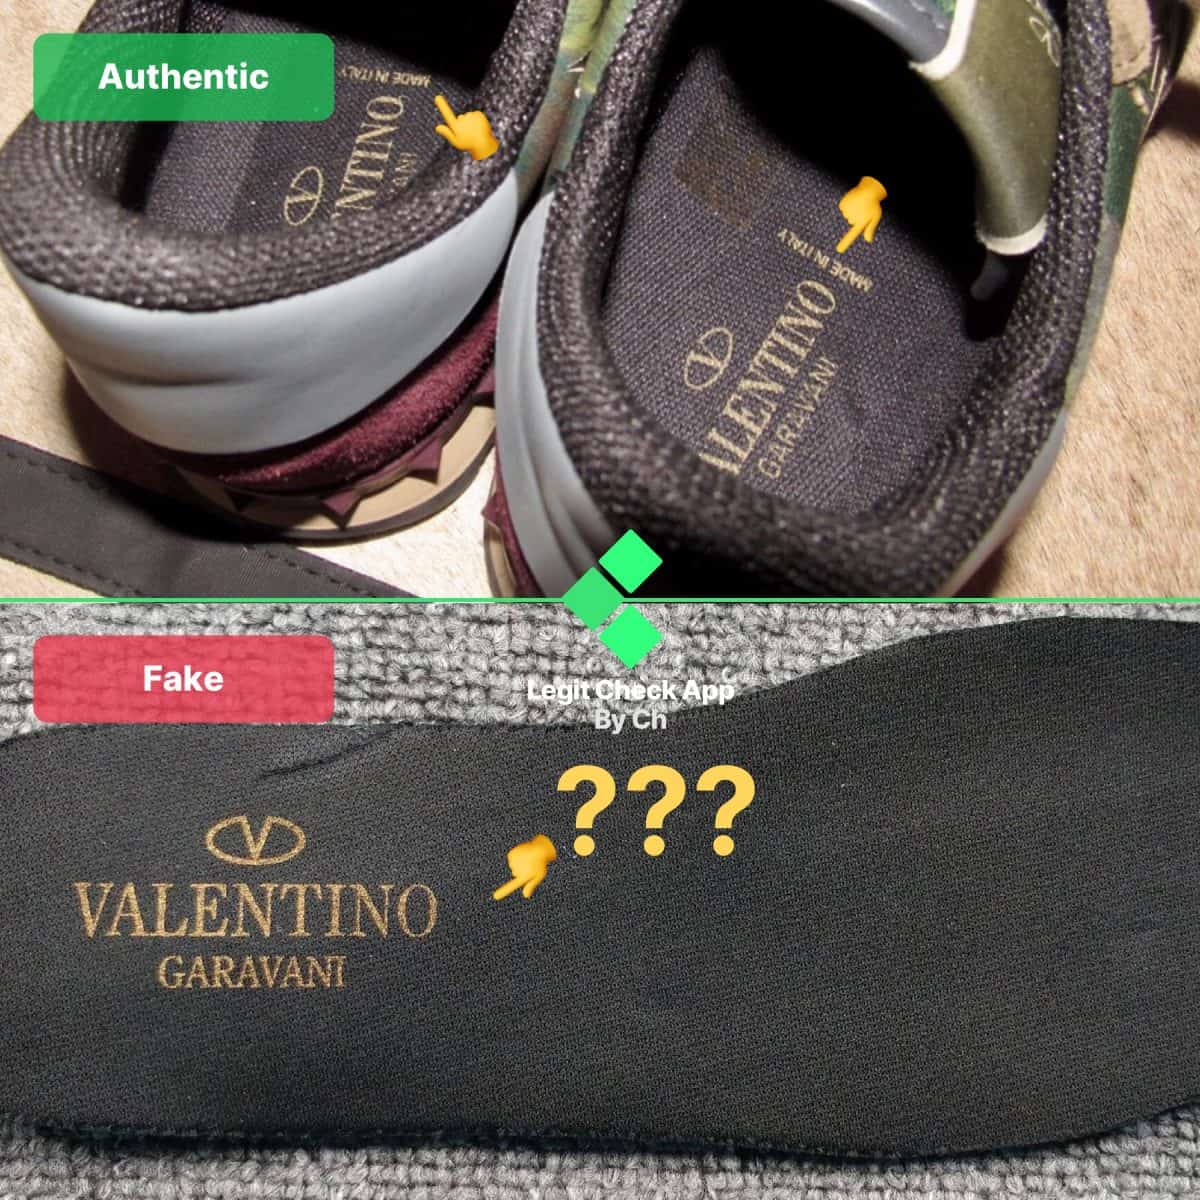 Fake vs Real Valentino Sneakers